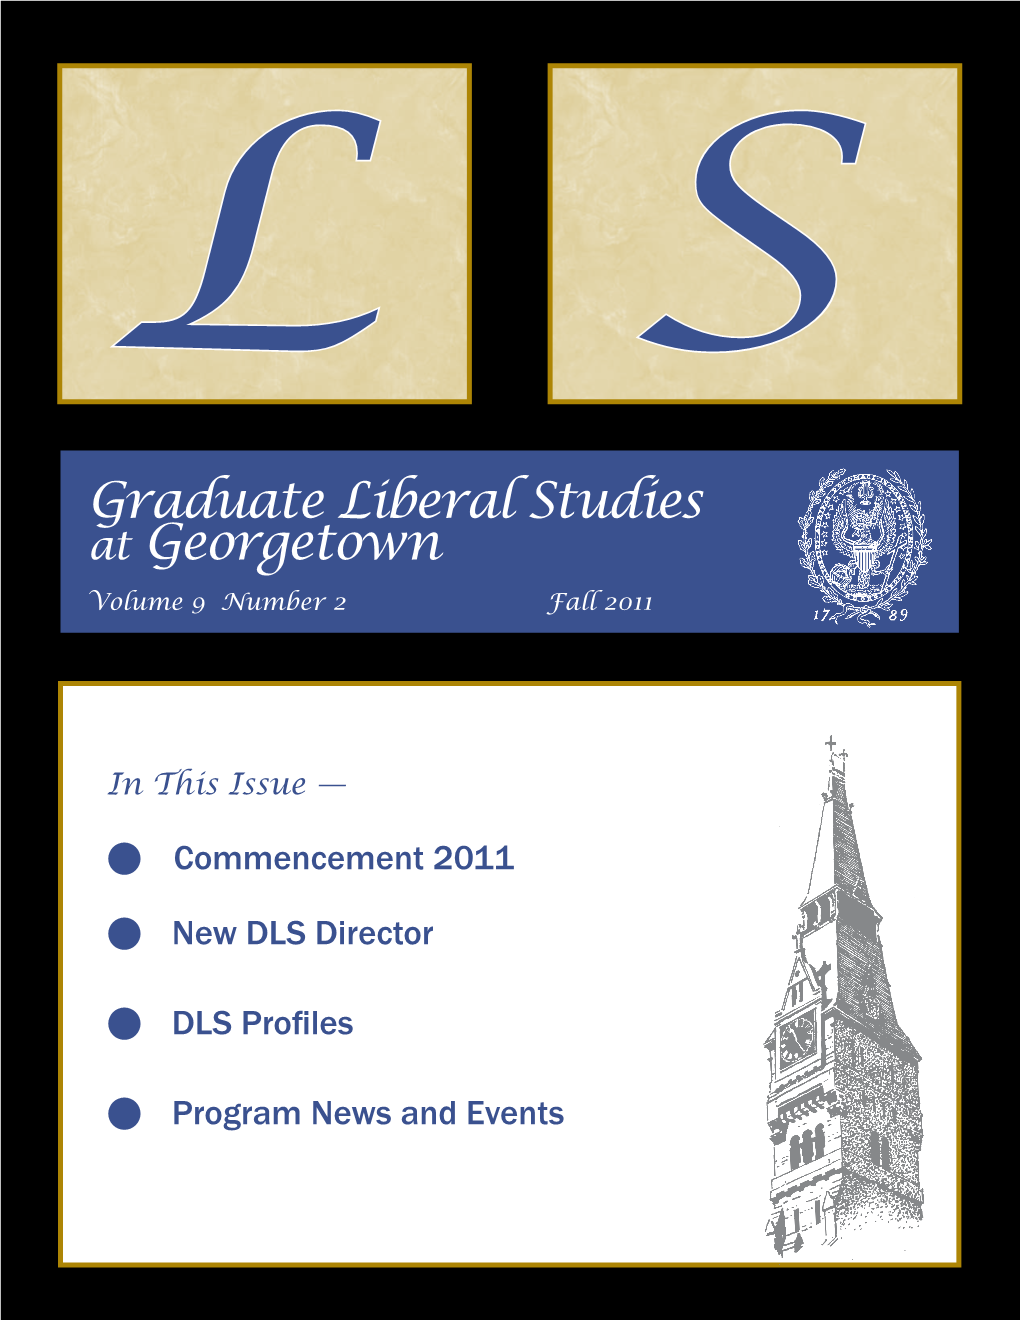 Graduate Liberal Studies at Georgetown Volume 9 Number 2 Fall 2011